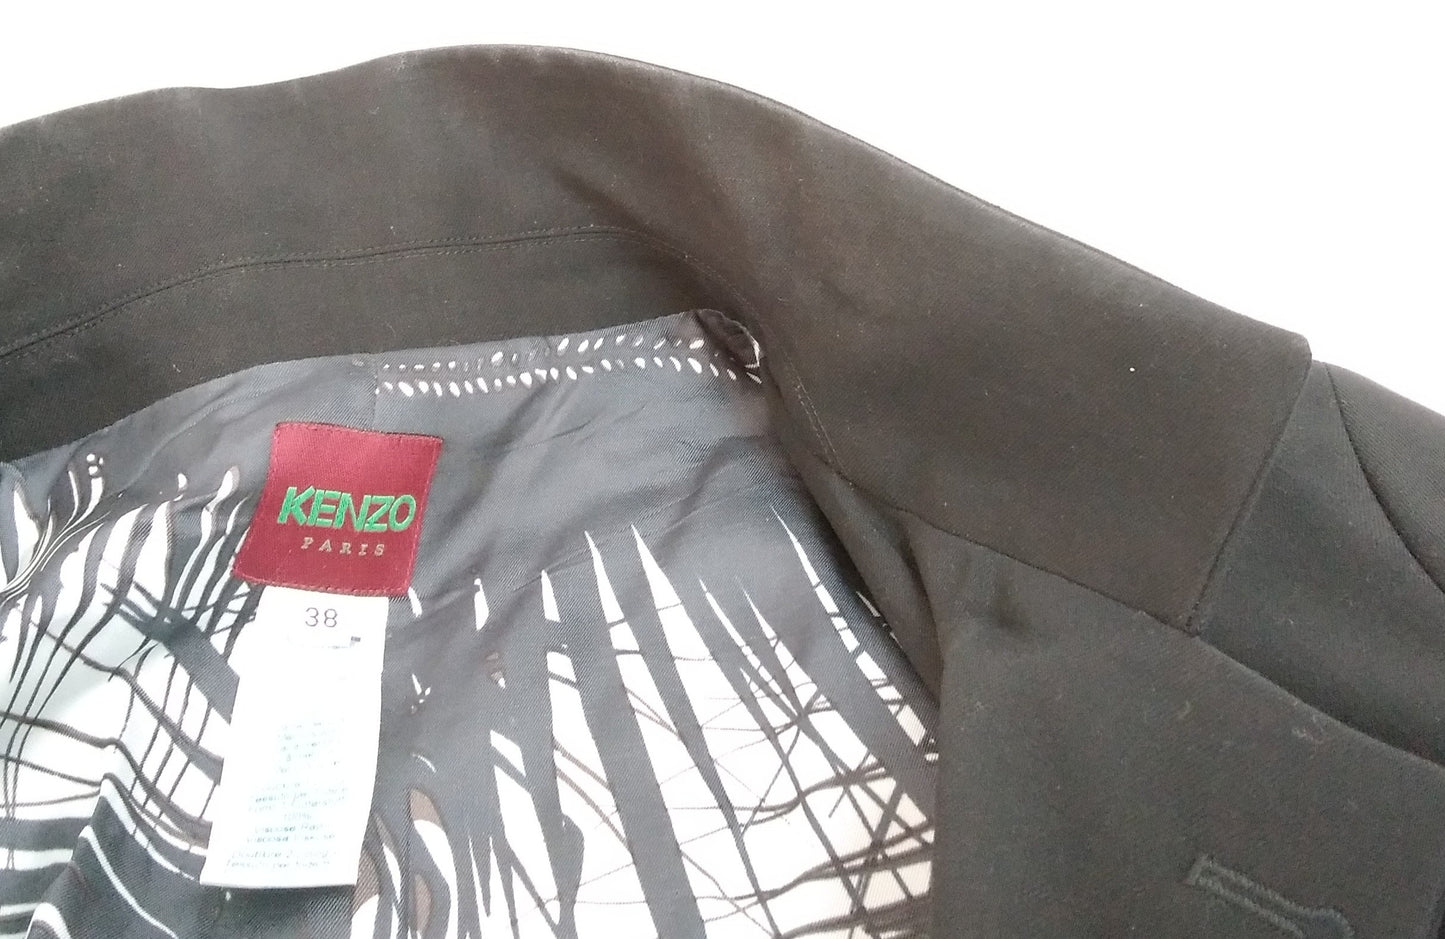 Kenzo Paris Women's Black Light Blazer -- Size 38 (EU)